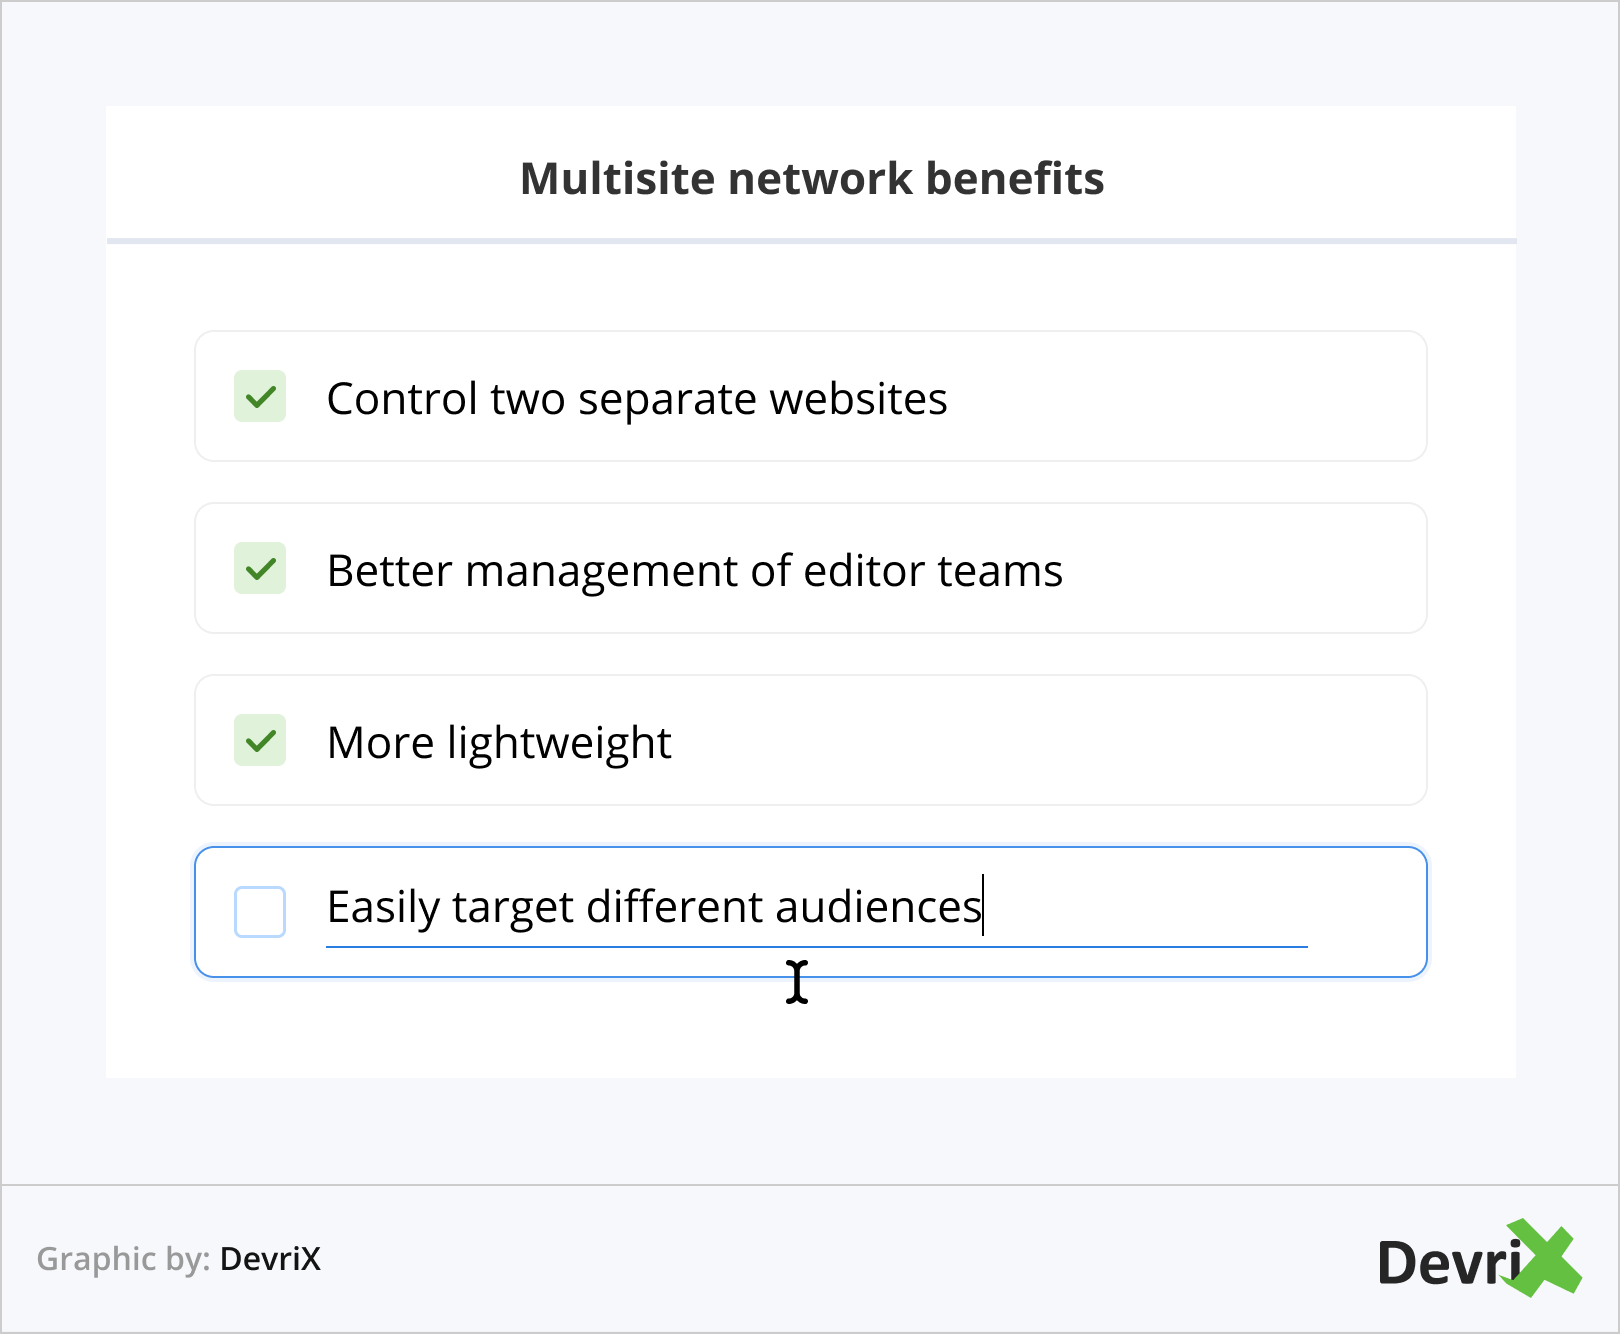 Multisite network benefits